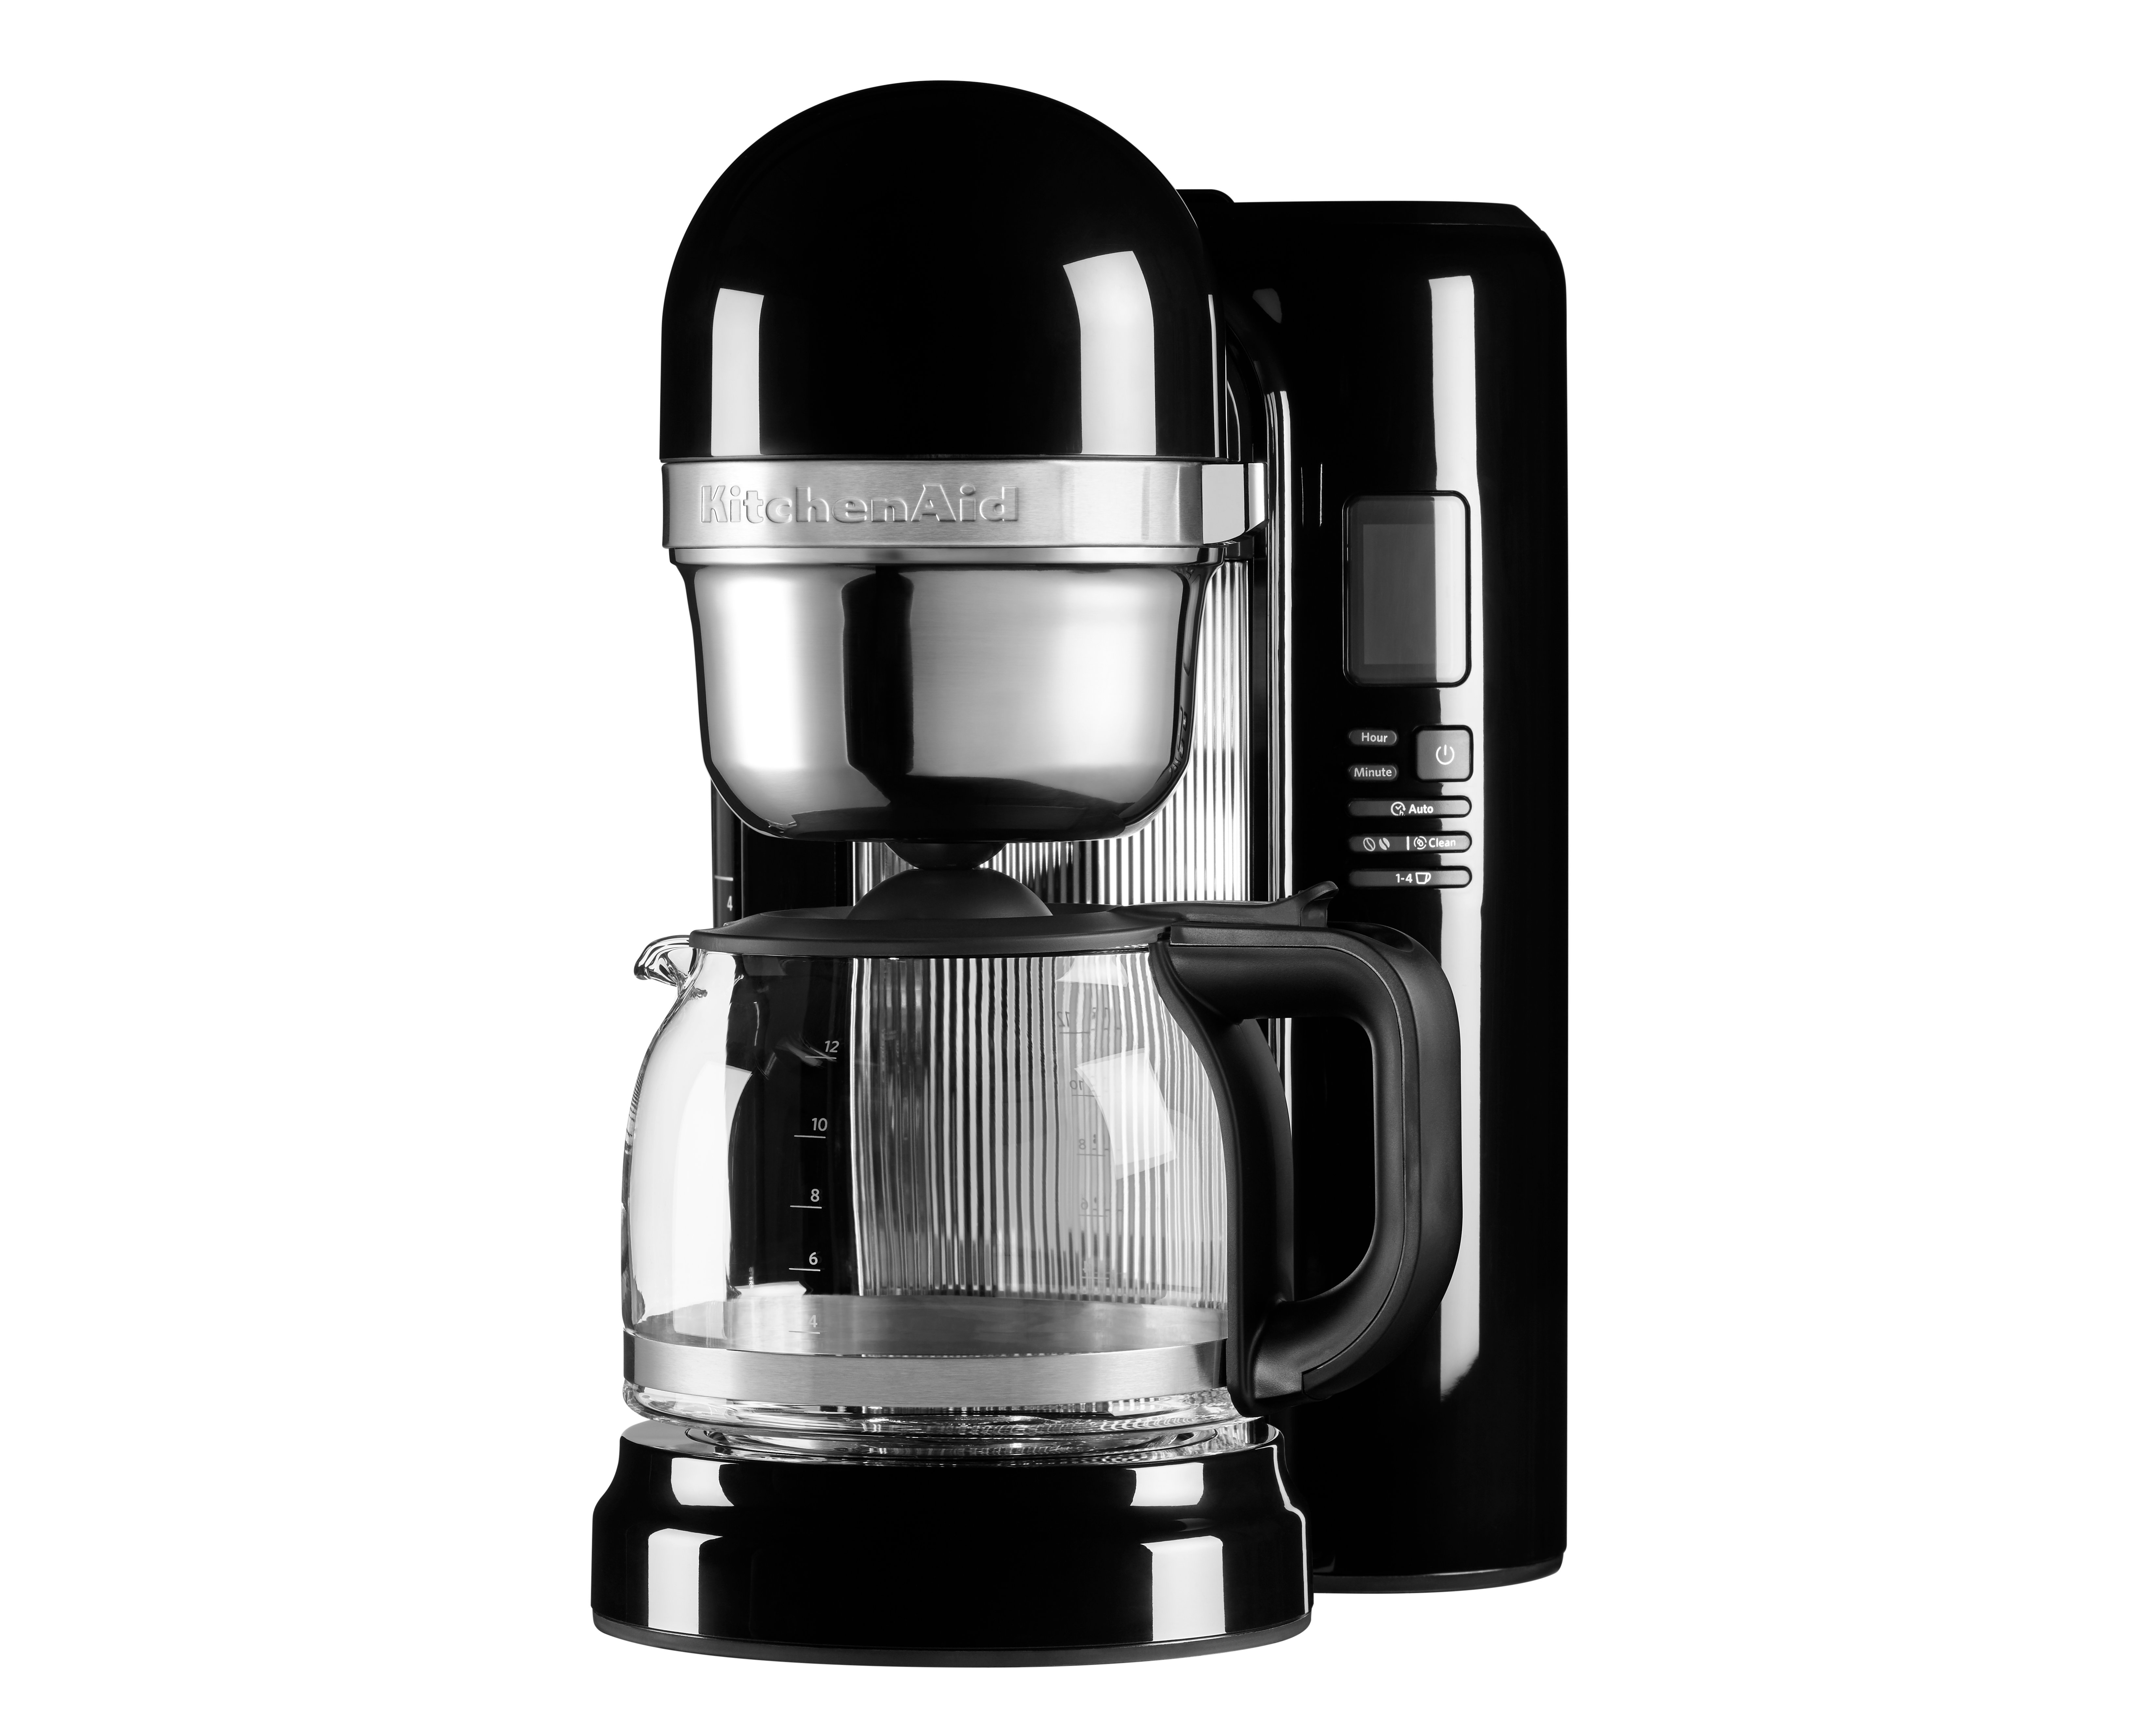 Ewell Udvalg grim Køb KitchenAid - One Touch kaffemaskine - Sort